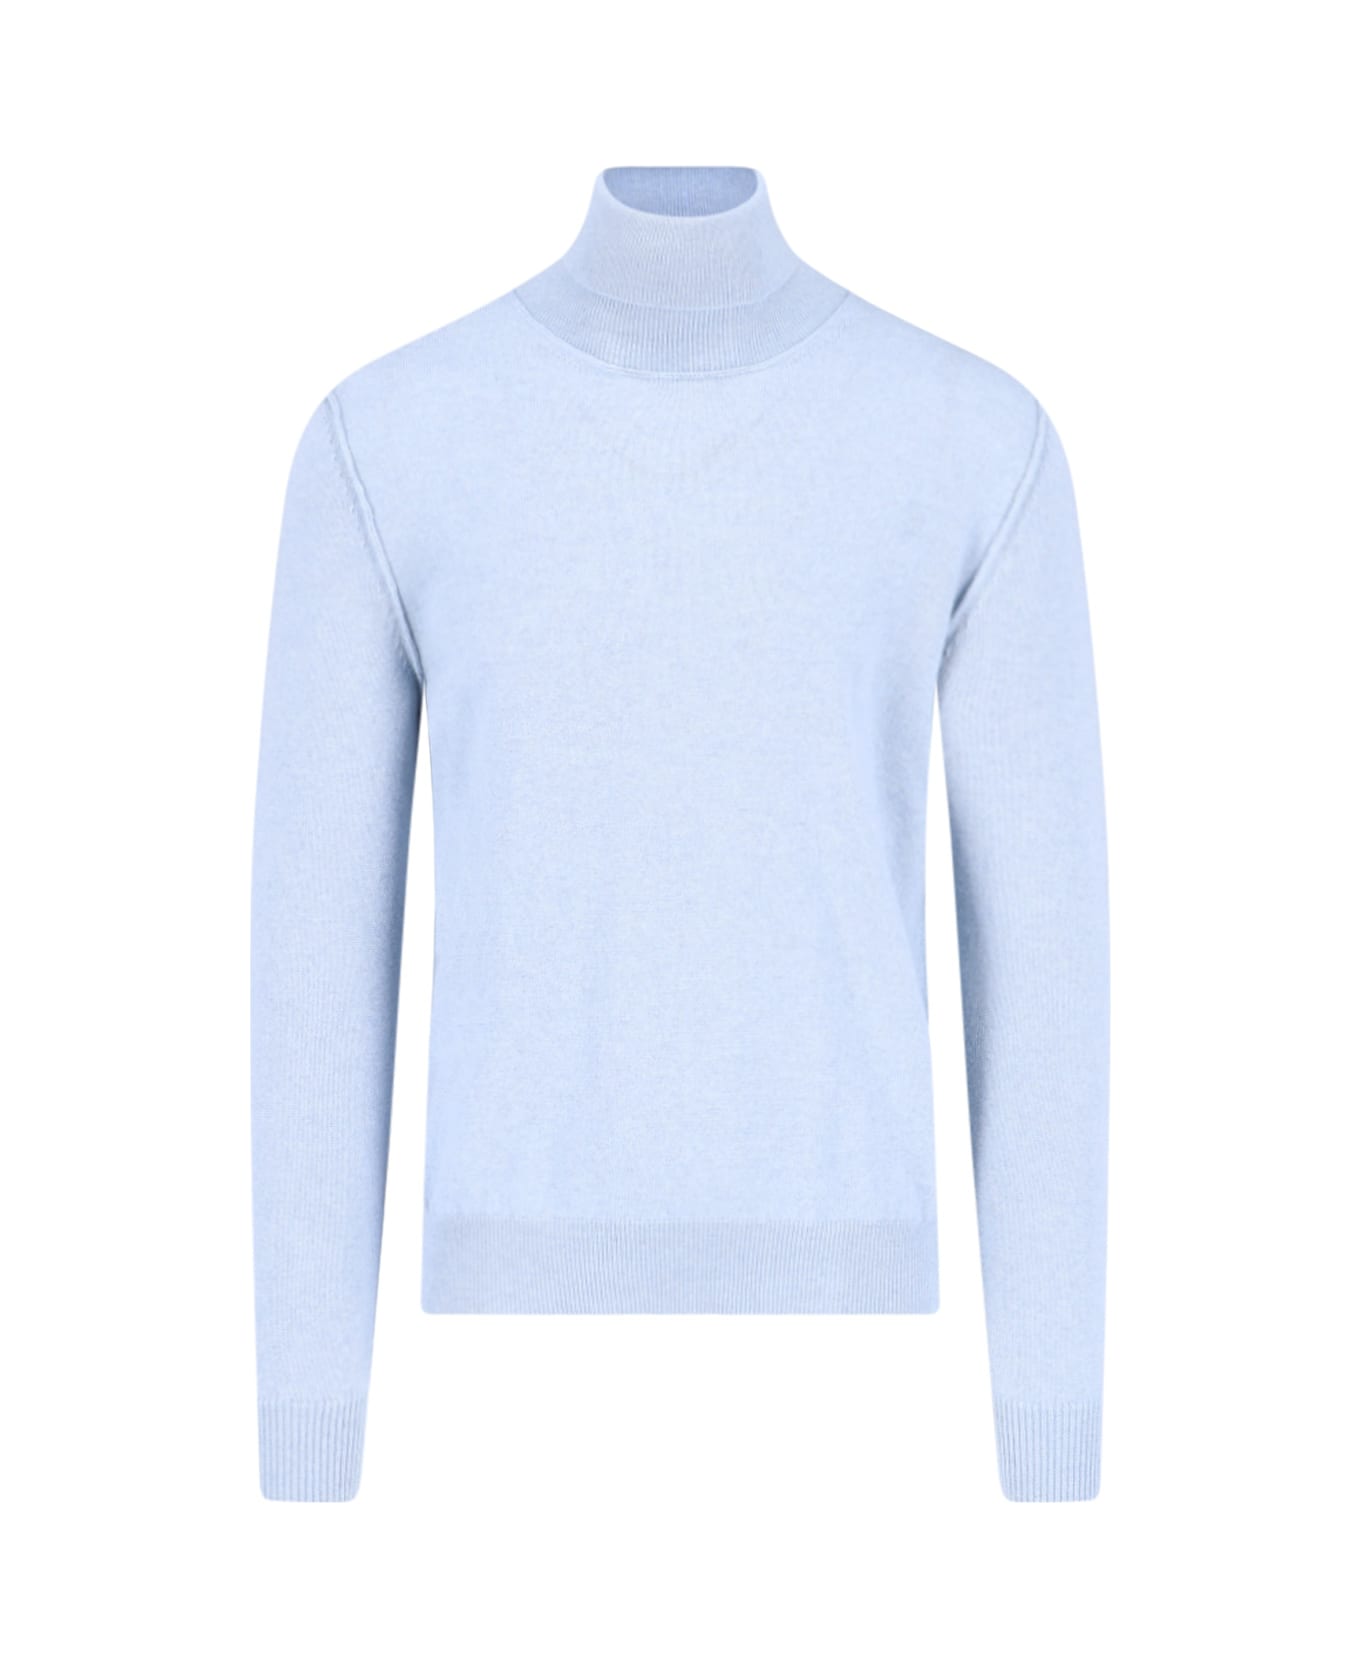 Maison Margiela Cashmere Sweater - Light blue ニットウェア